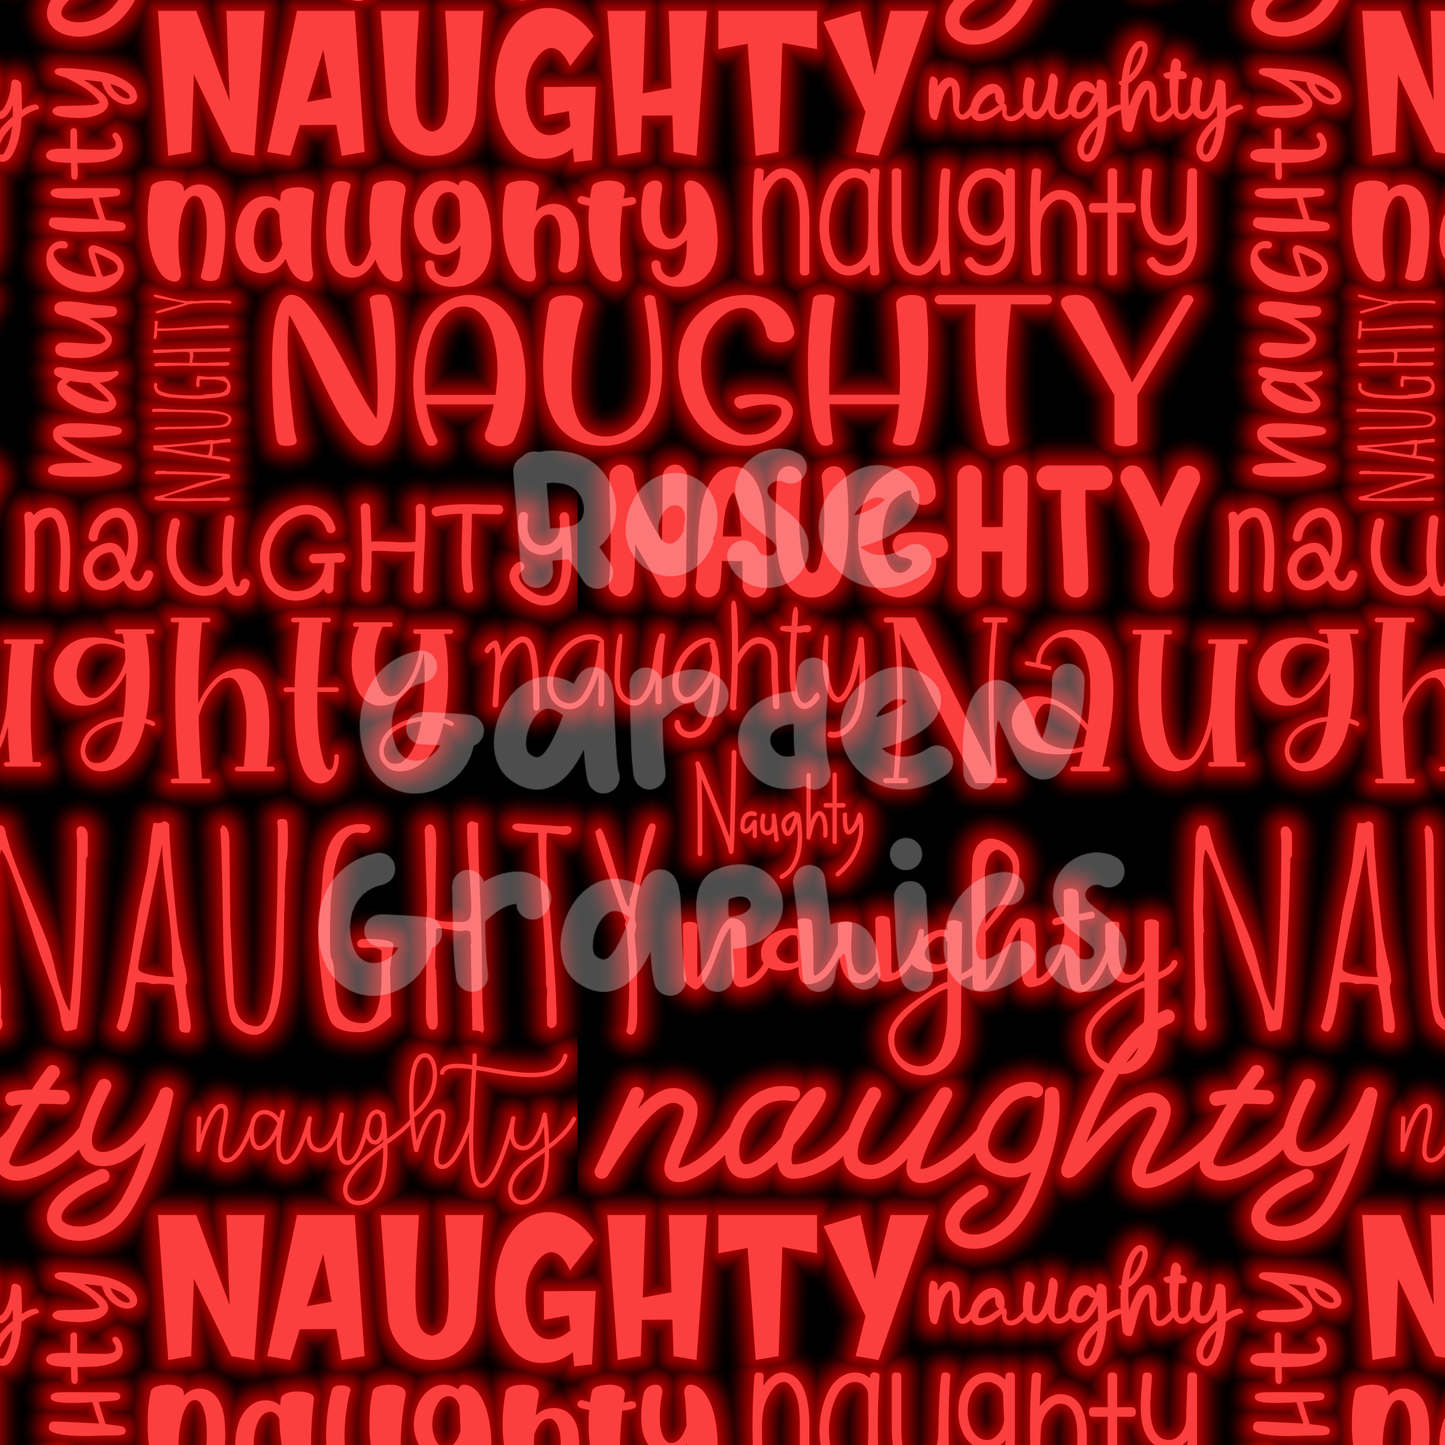 Naughty and Nice Glow Words 2 Seamless Images Bundle